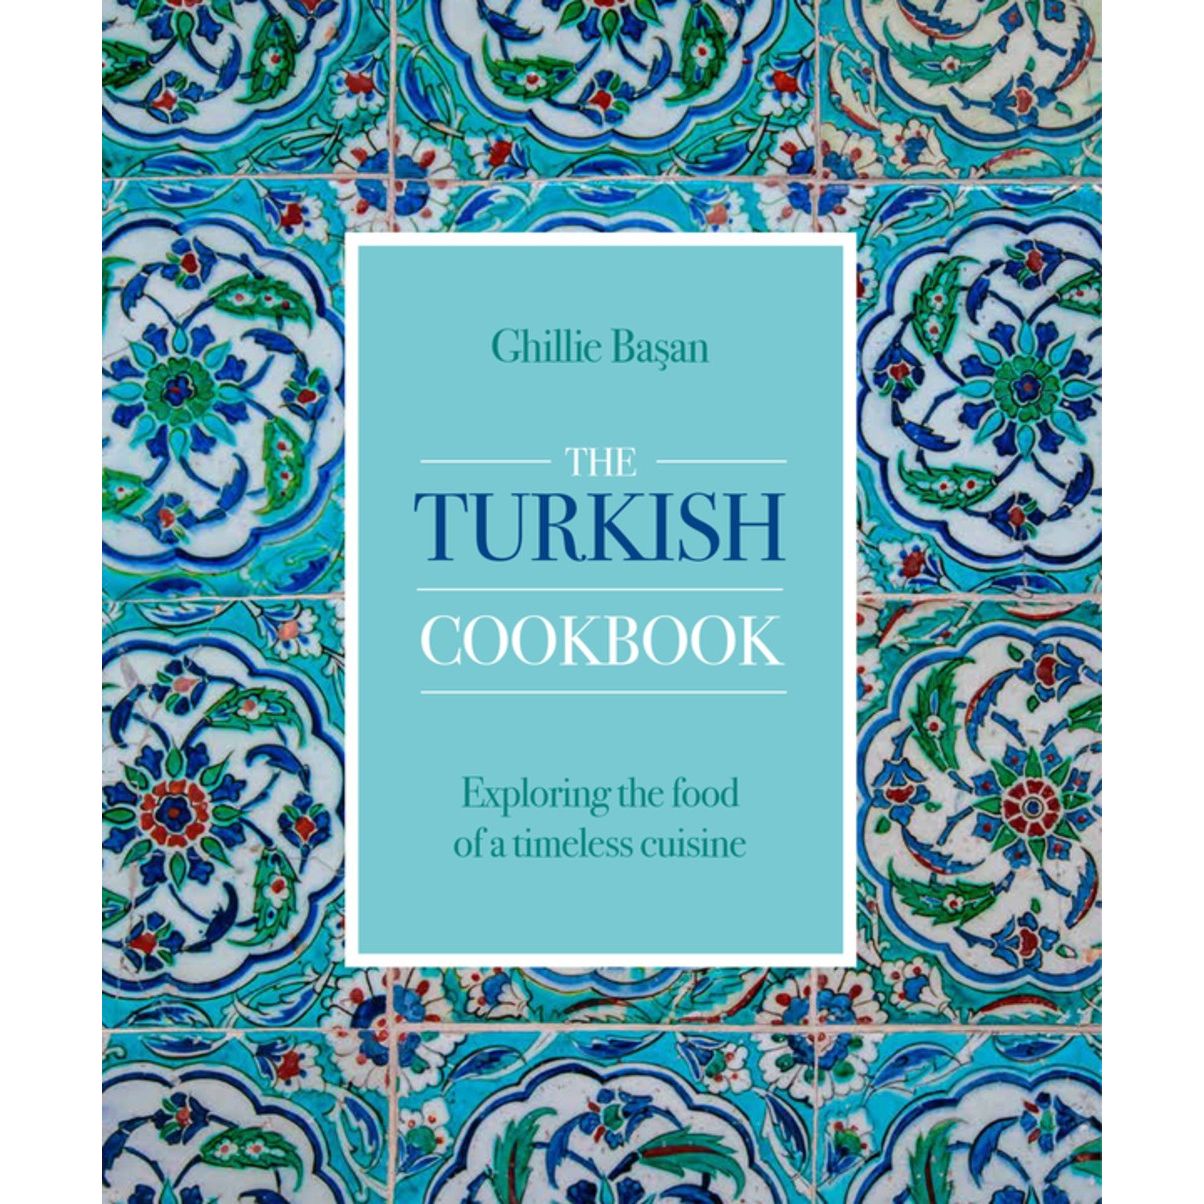 The Turkish Cookbook (Ghillie Basan)